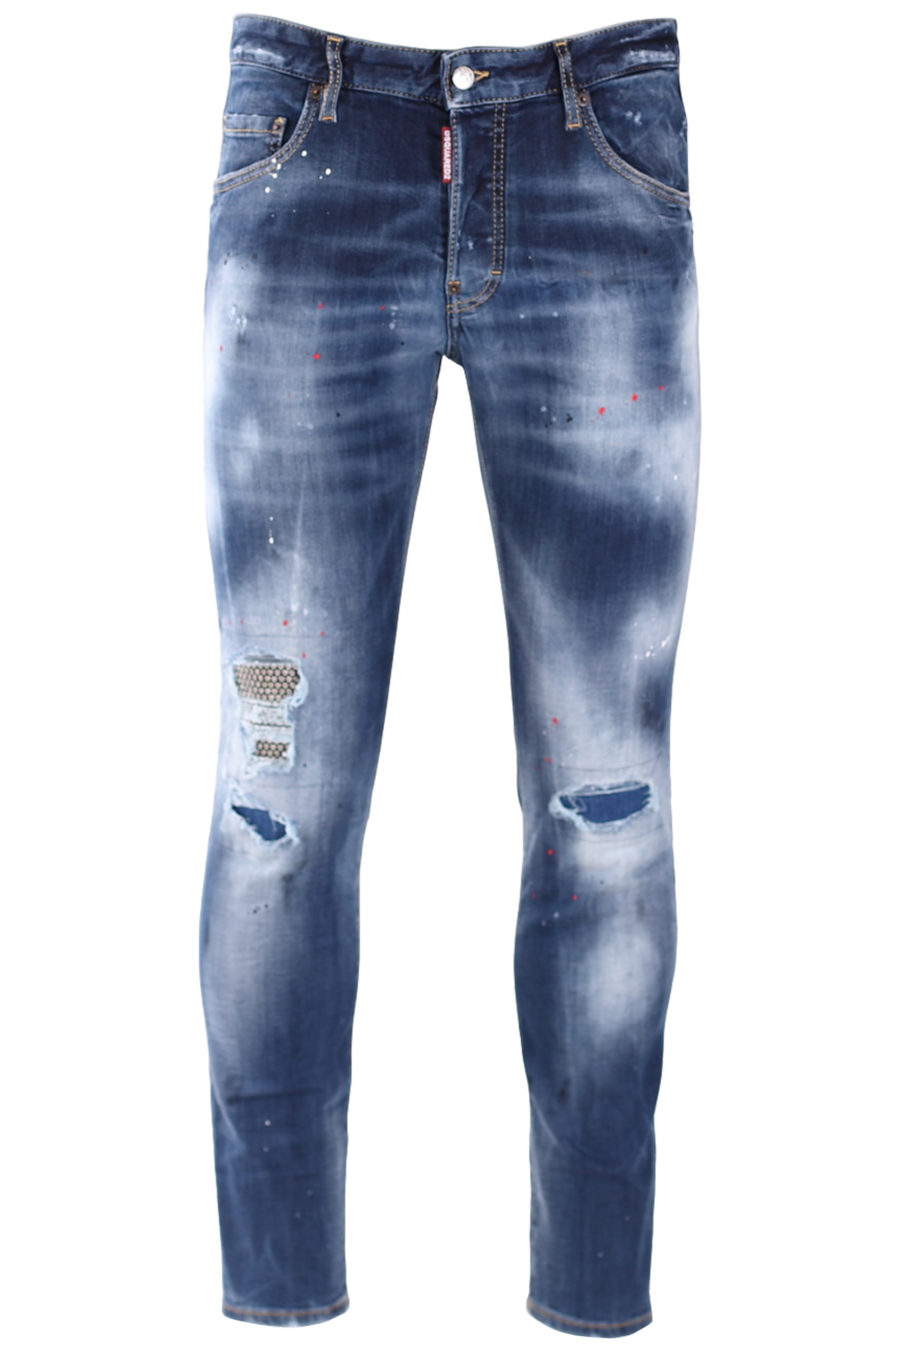 Jeans "Skater" azul con parche taches - c17fcfa46113f0ce2d655dd61d60c8db30f170c6